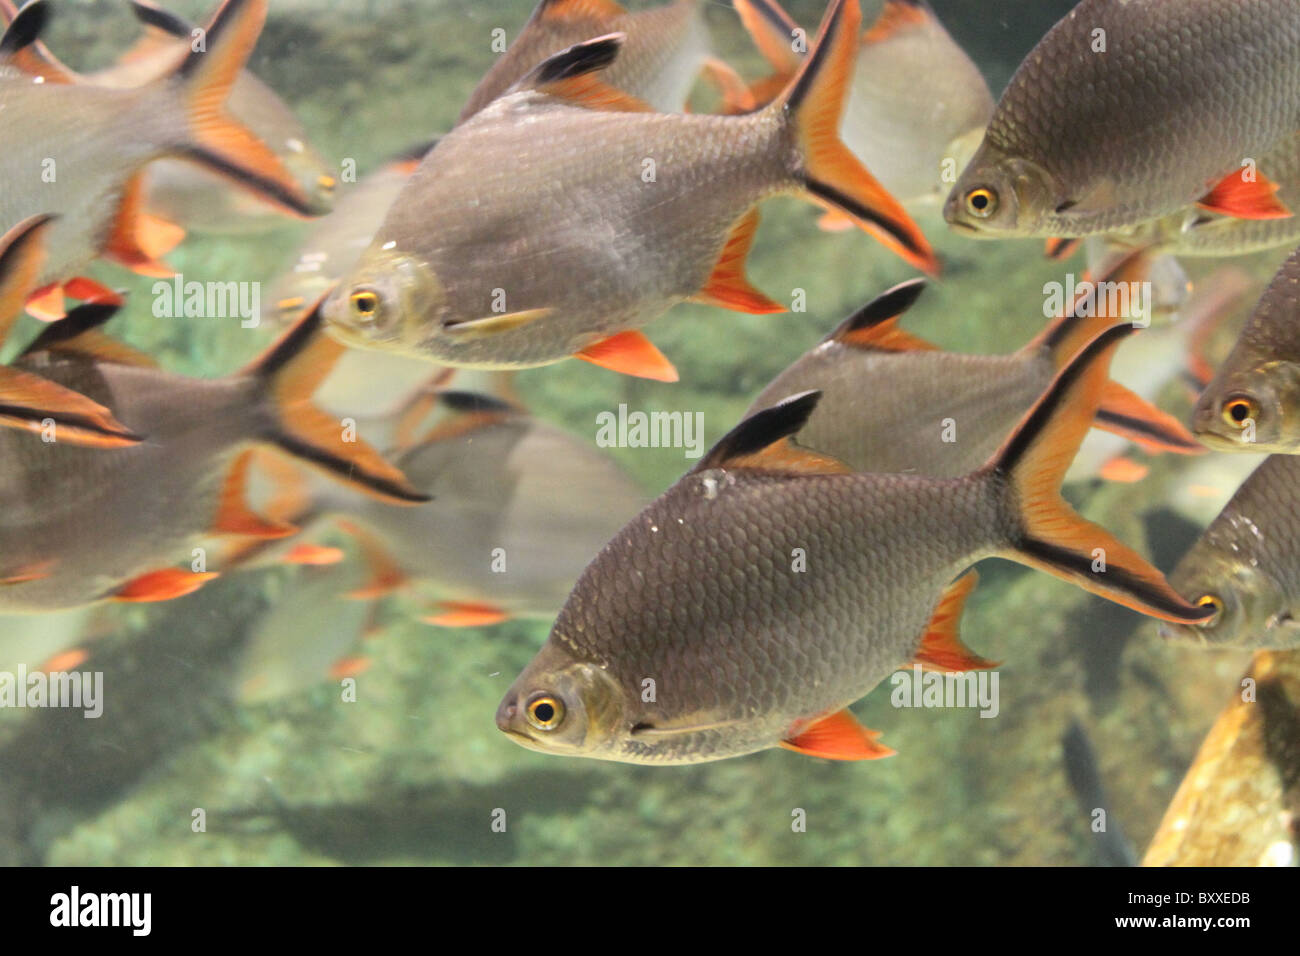 Banc de poissons dans l'aquarium Banque D'Images